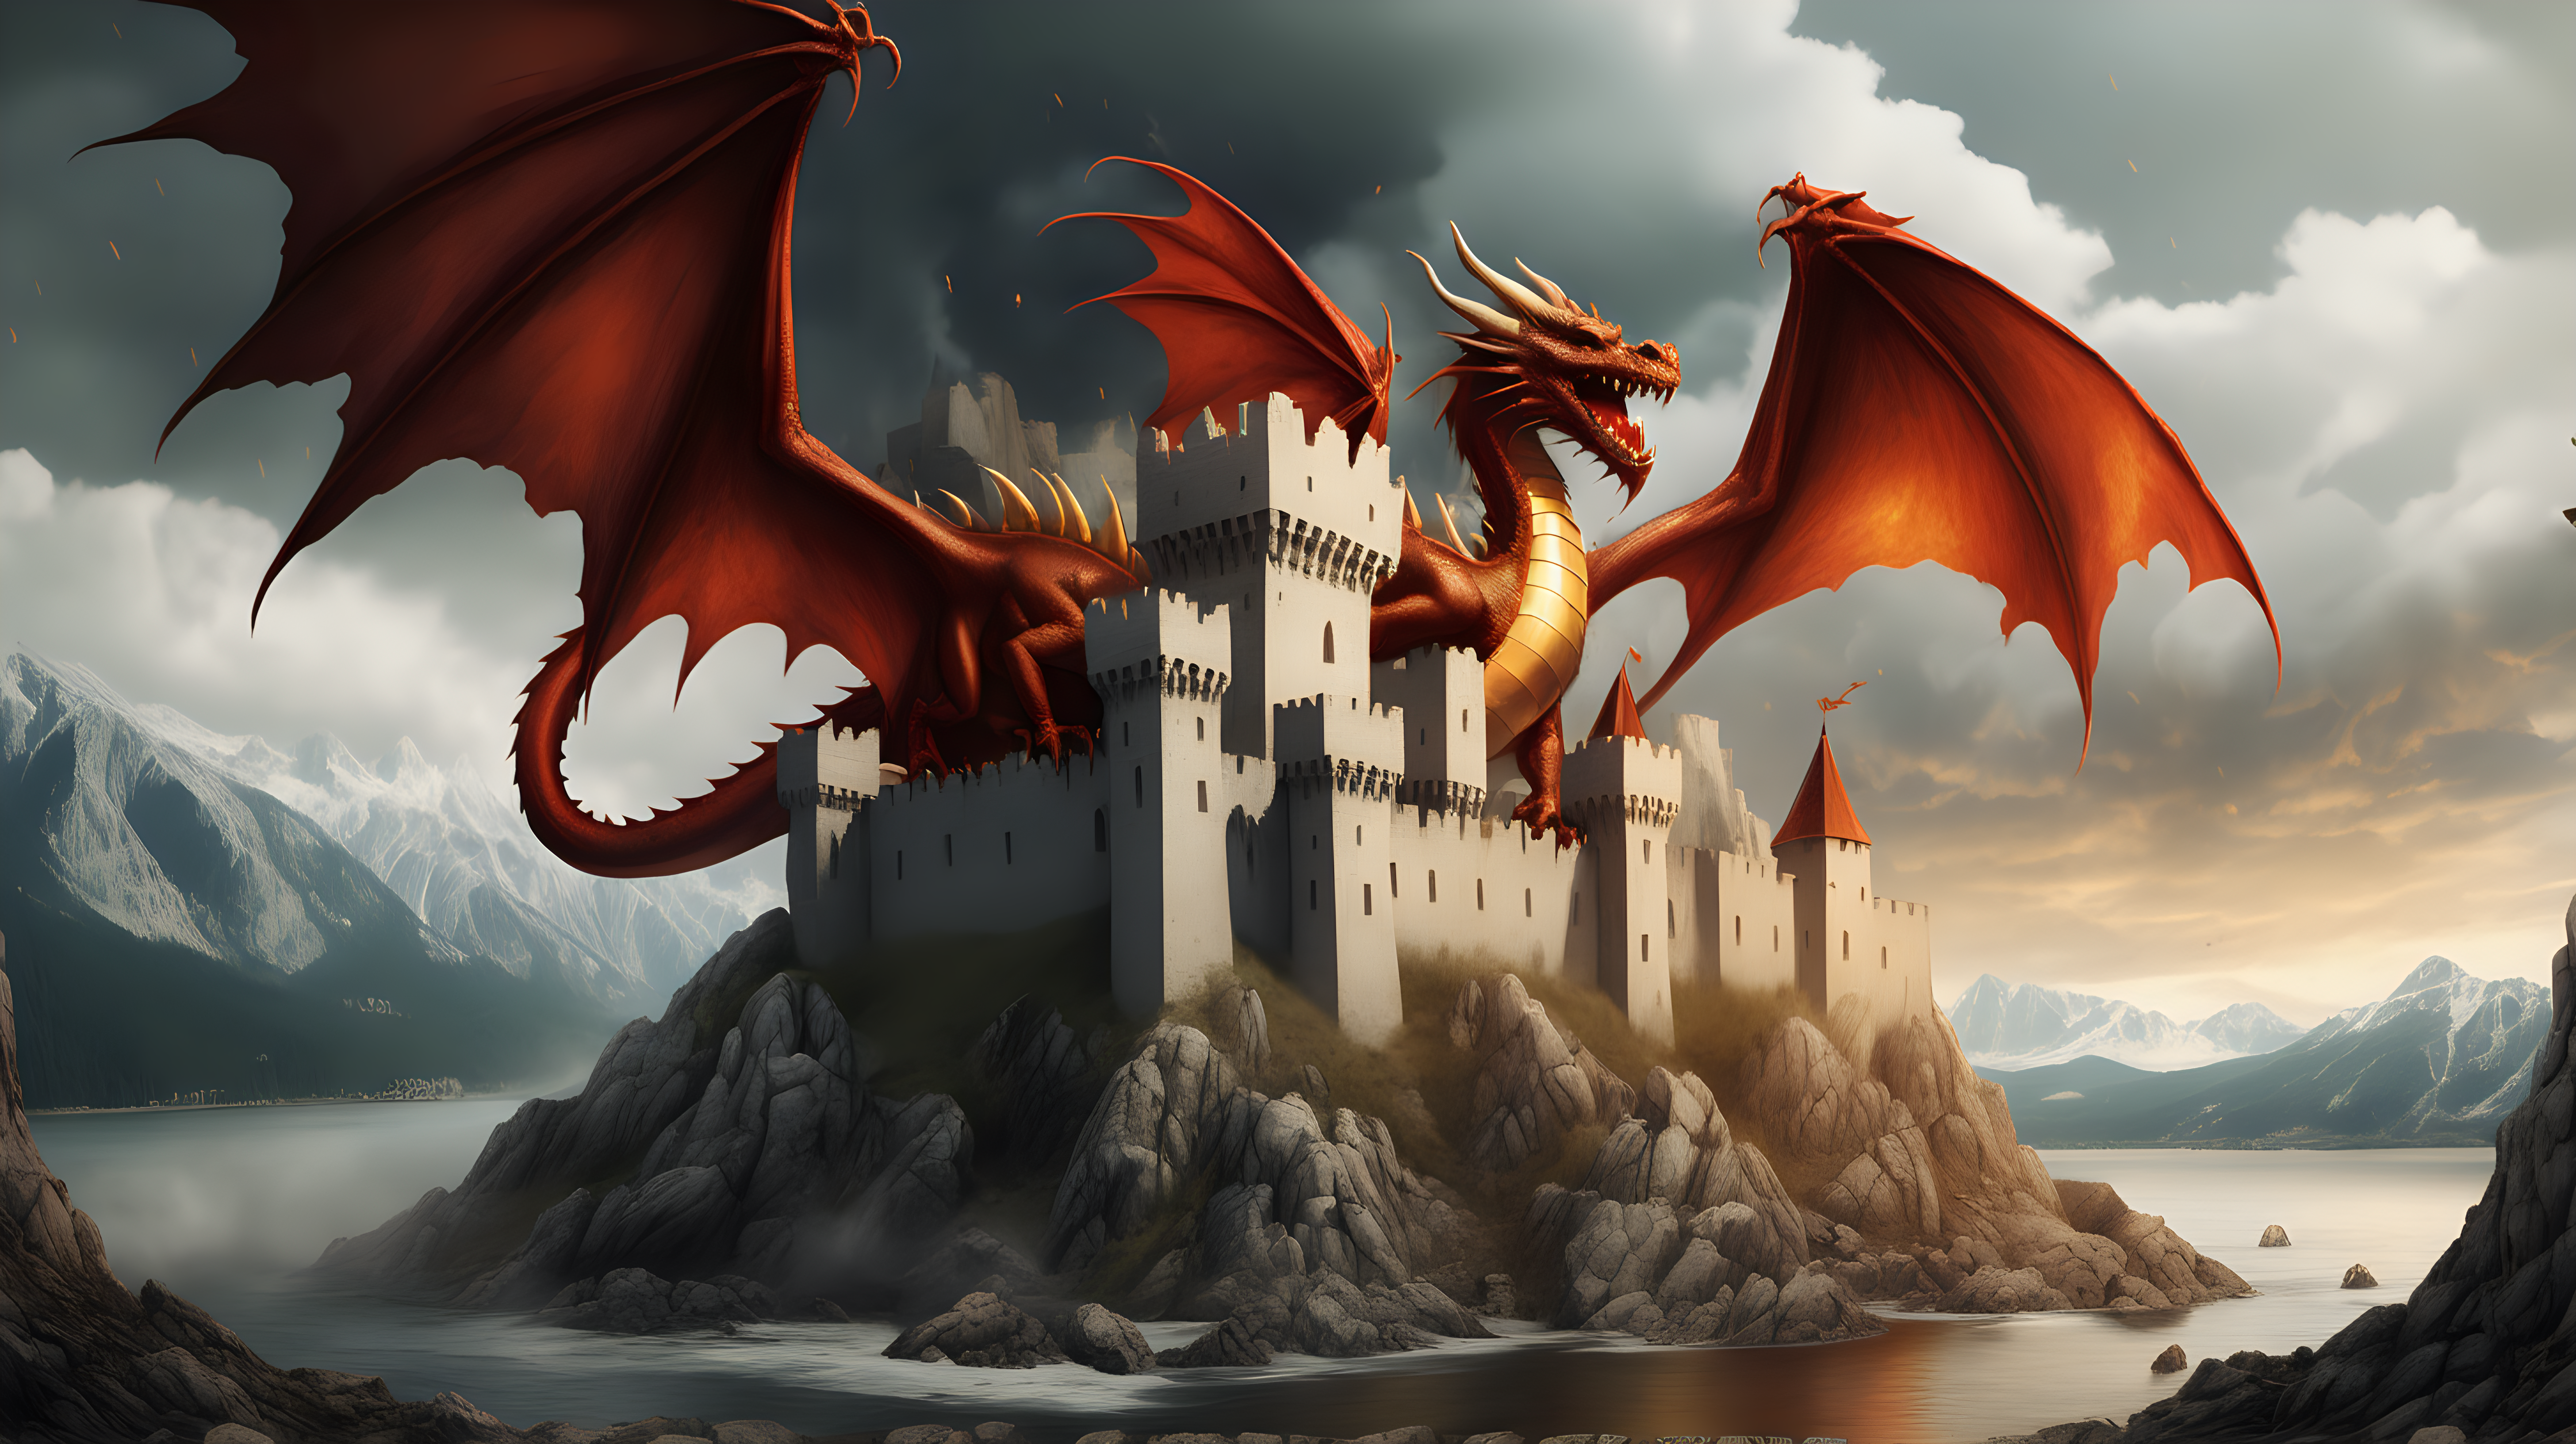 dragon destroying an old castle